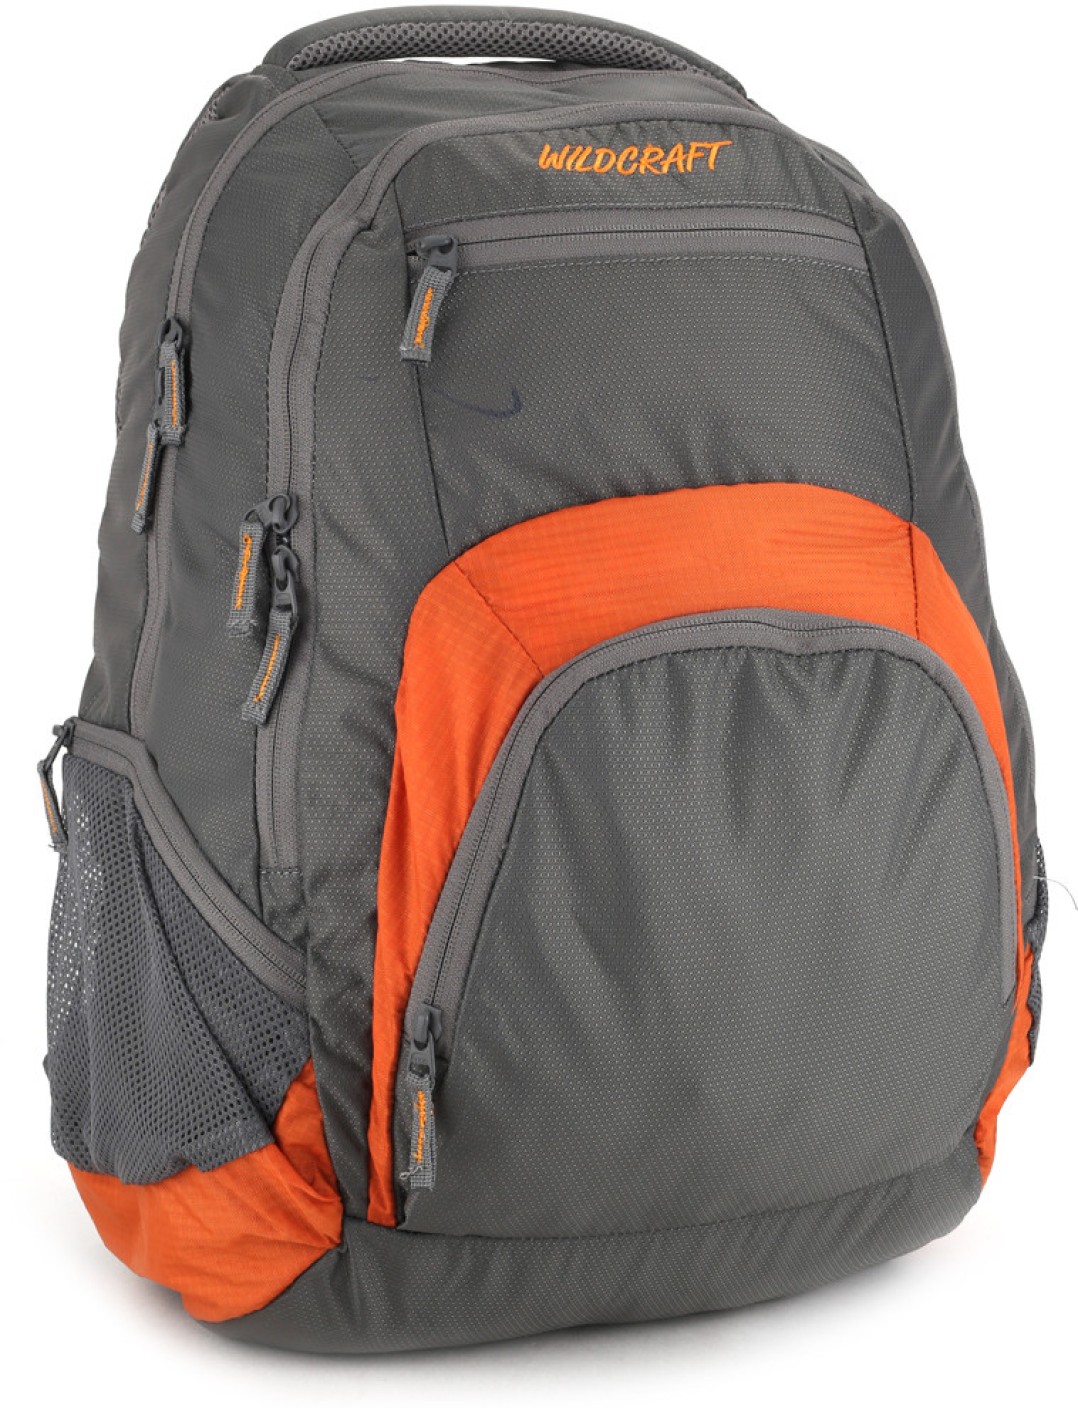 Wildcraft Hopper orange 30 L Laptop Backpack Grey, Orange - Price in